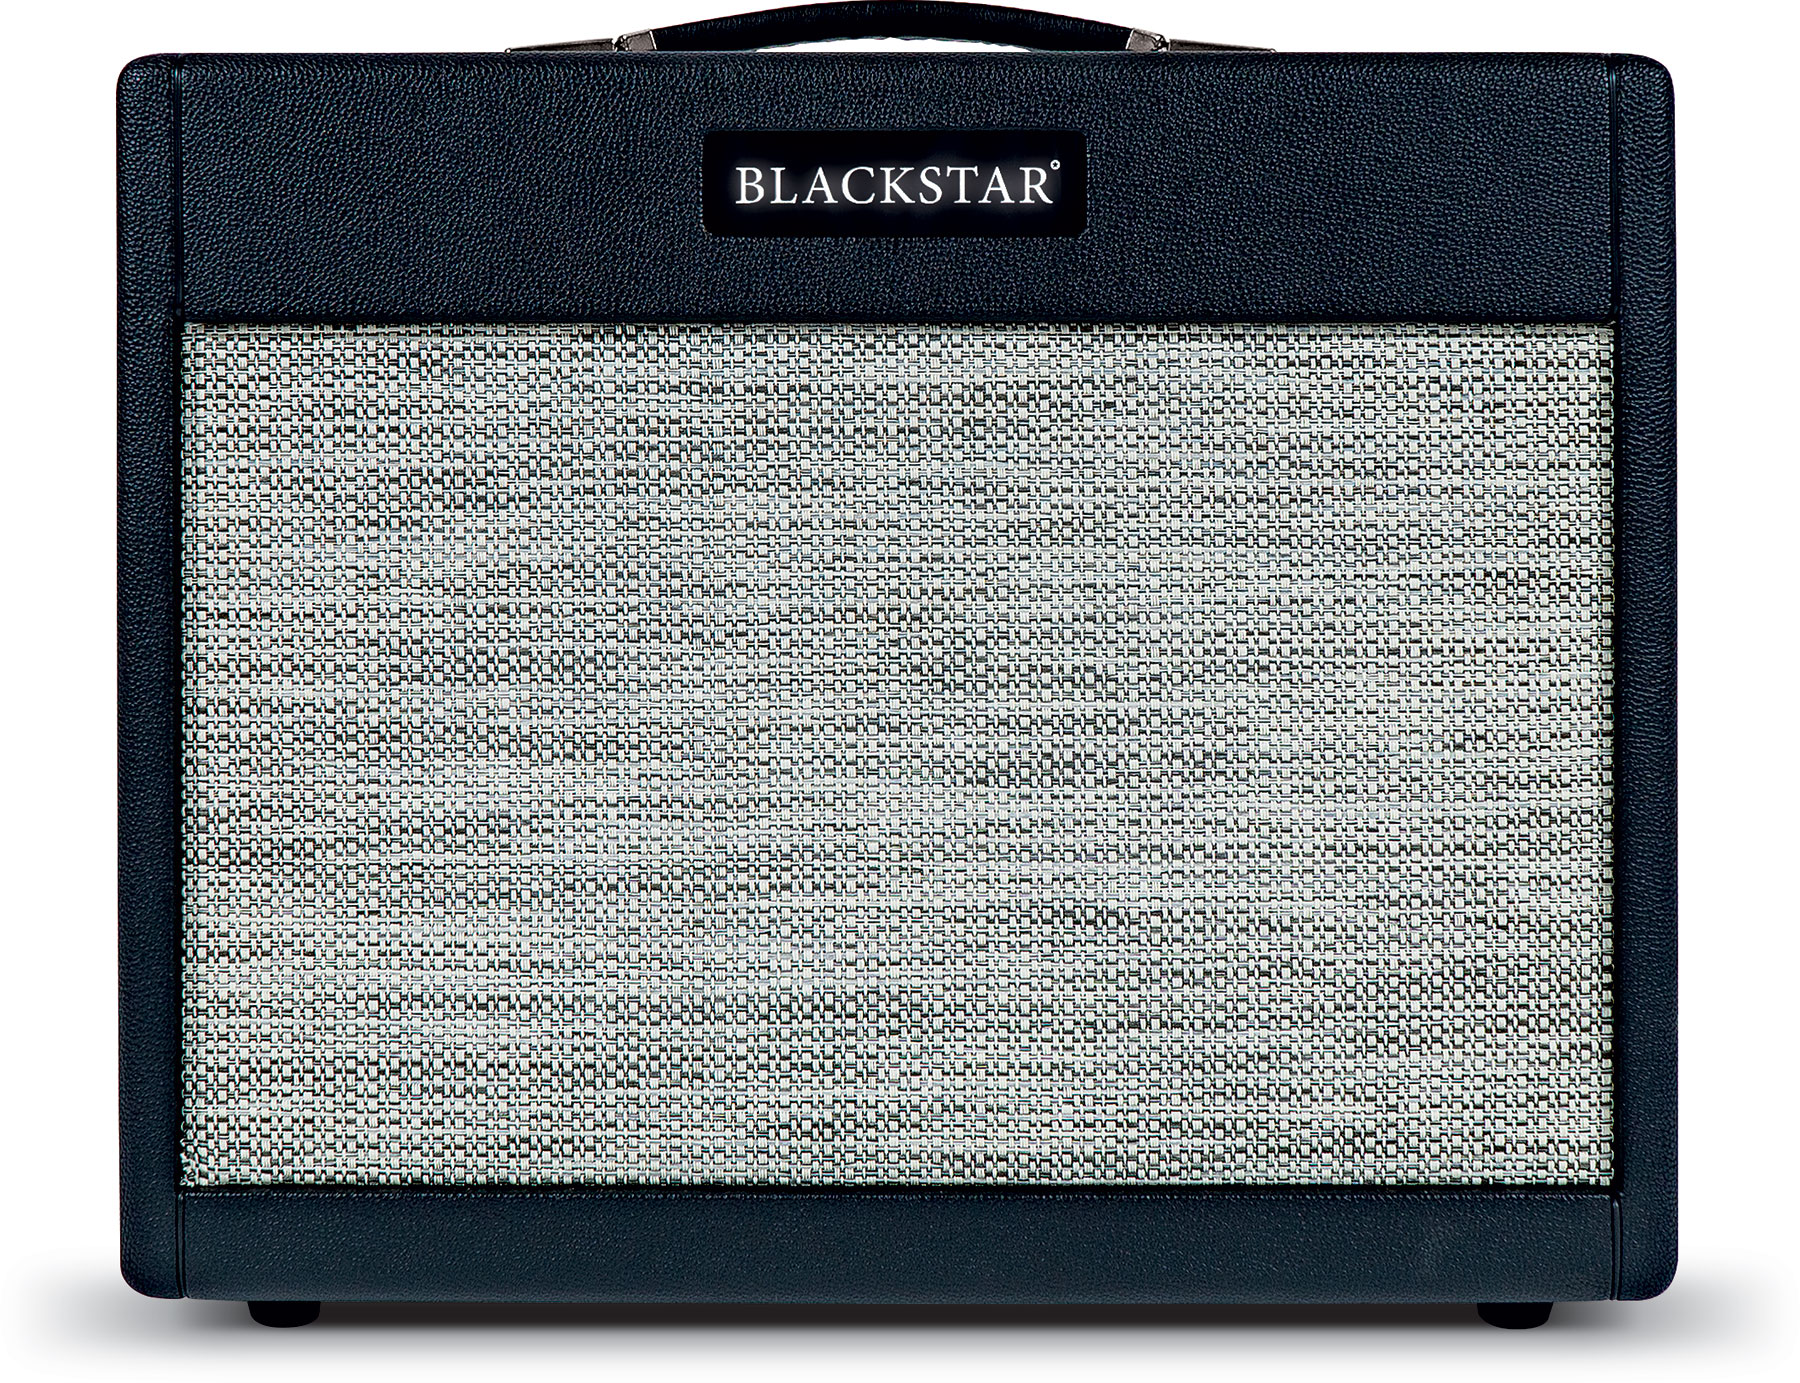 Blackstar St. James 6l6 50/5/2w 1x12 Black - Electric guitar combo amp - Variation 1